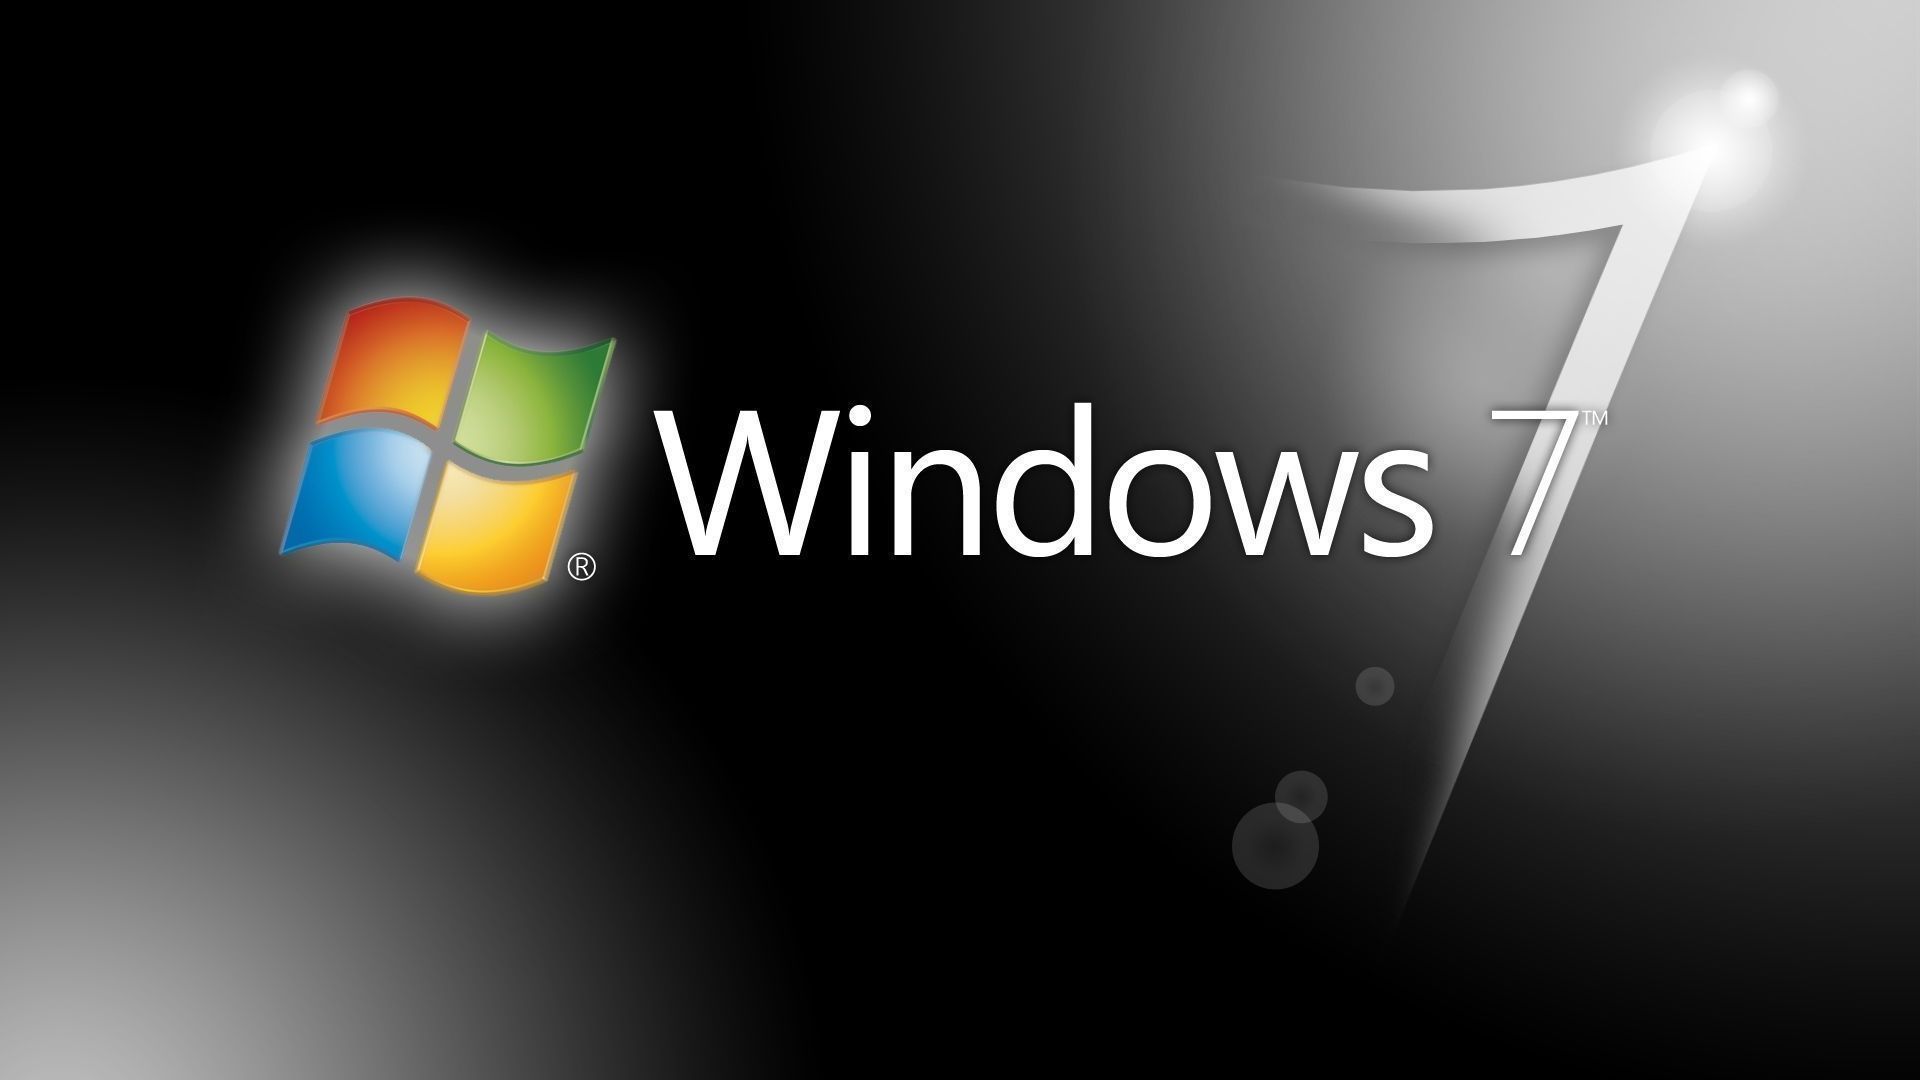 Windows 7 Wallpaper Hd 1080P 256744